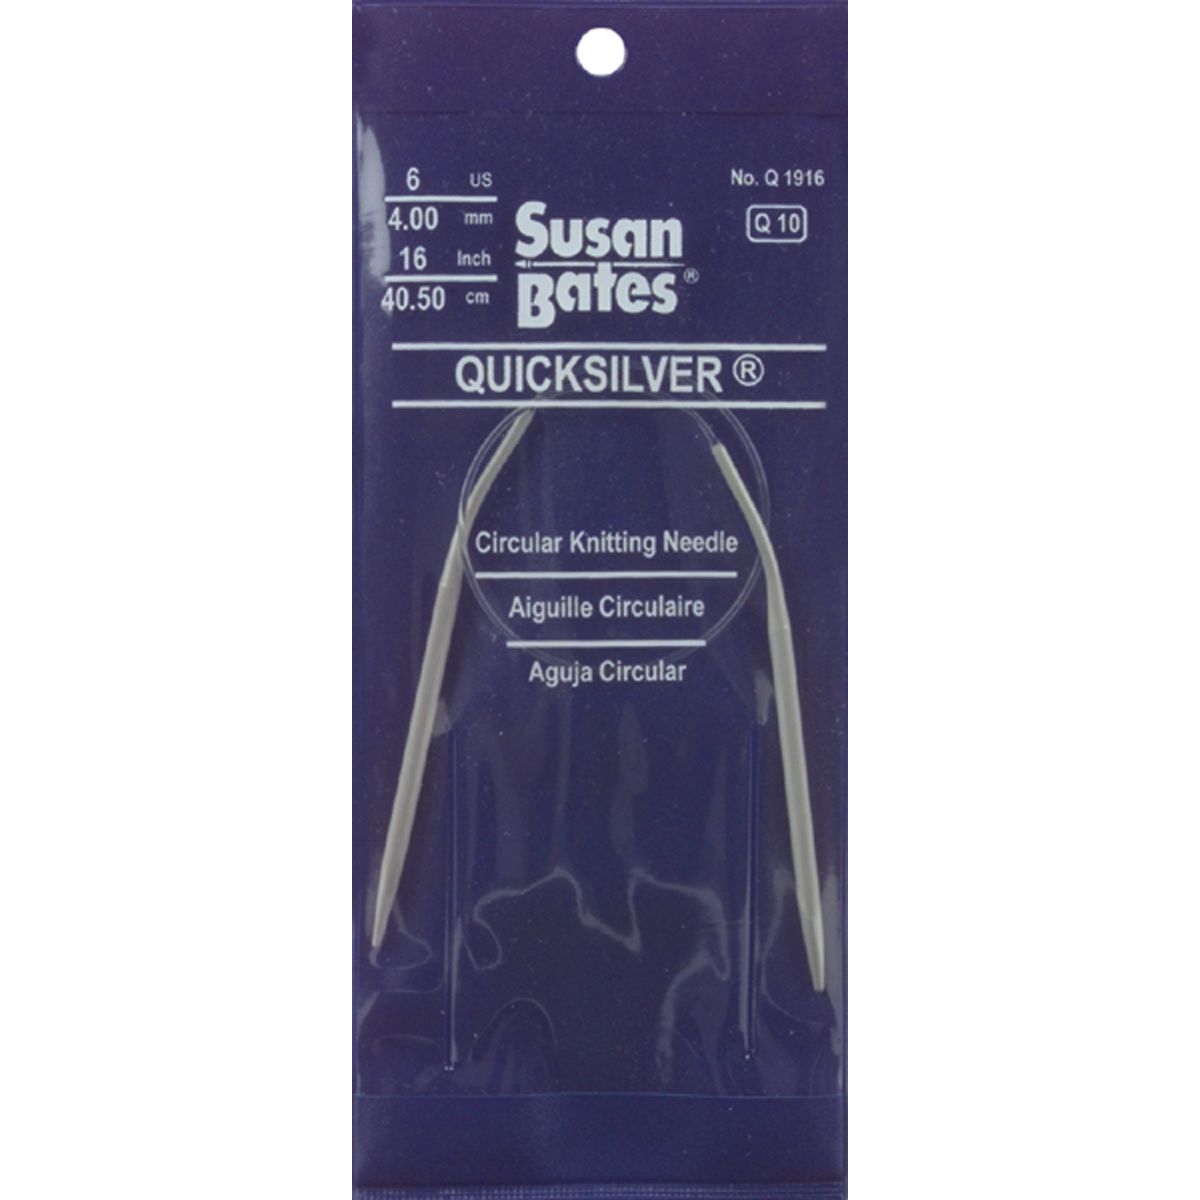 Susan Bates Quicksilver Circular Knitting Needle 36" Size 11